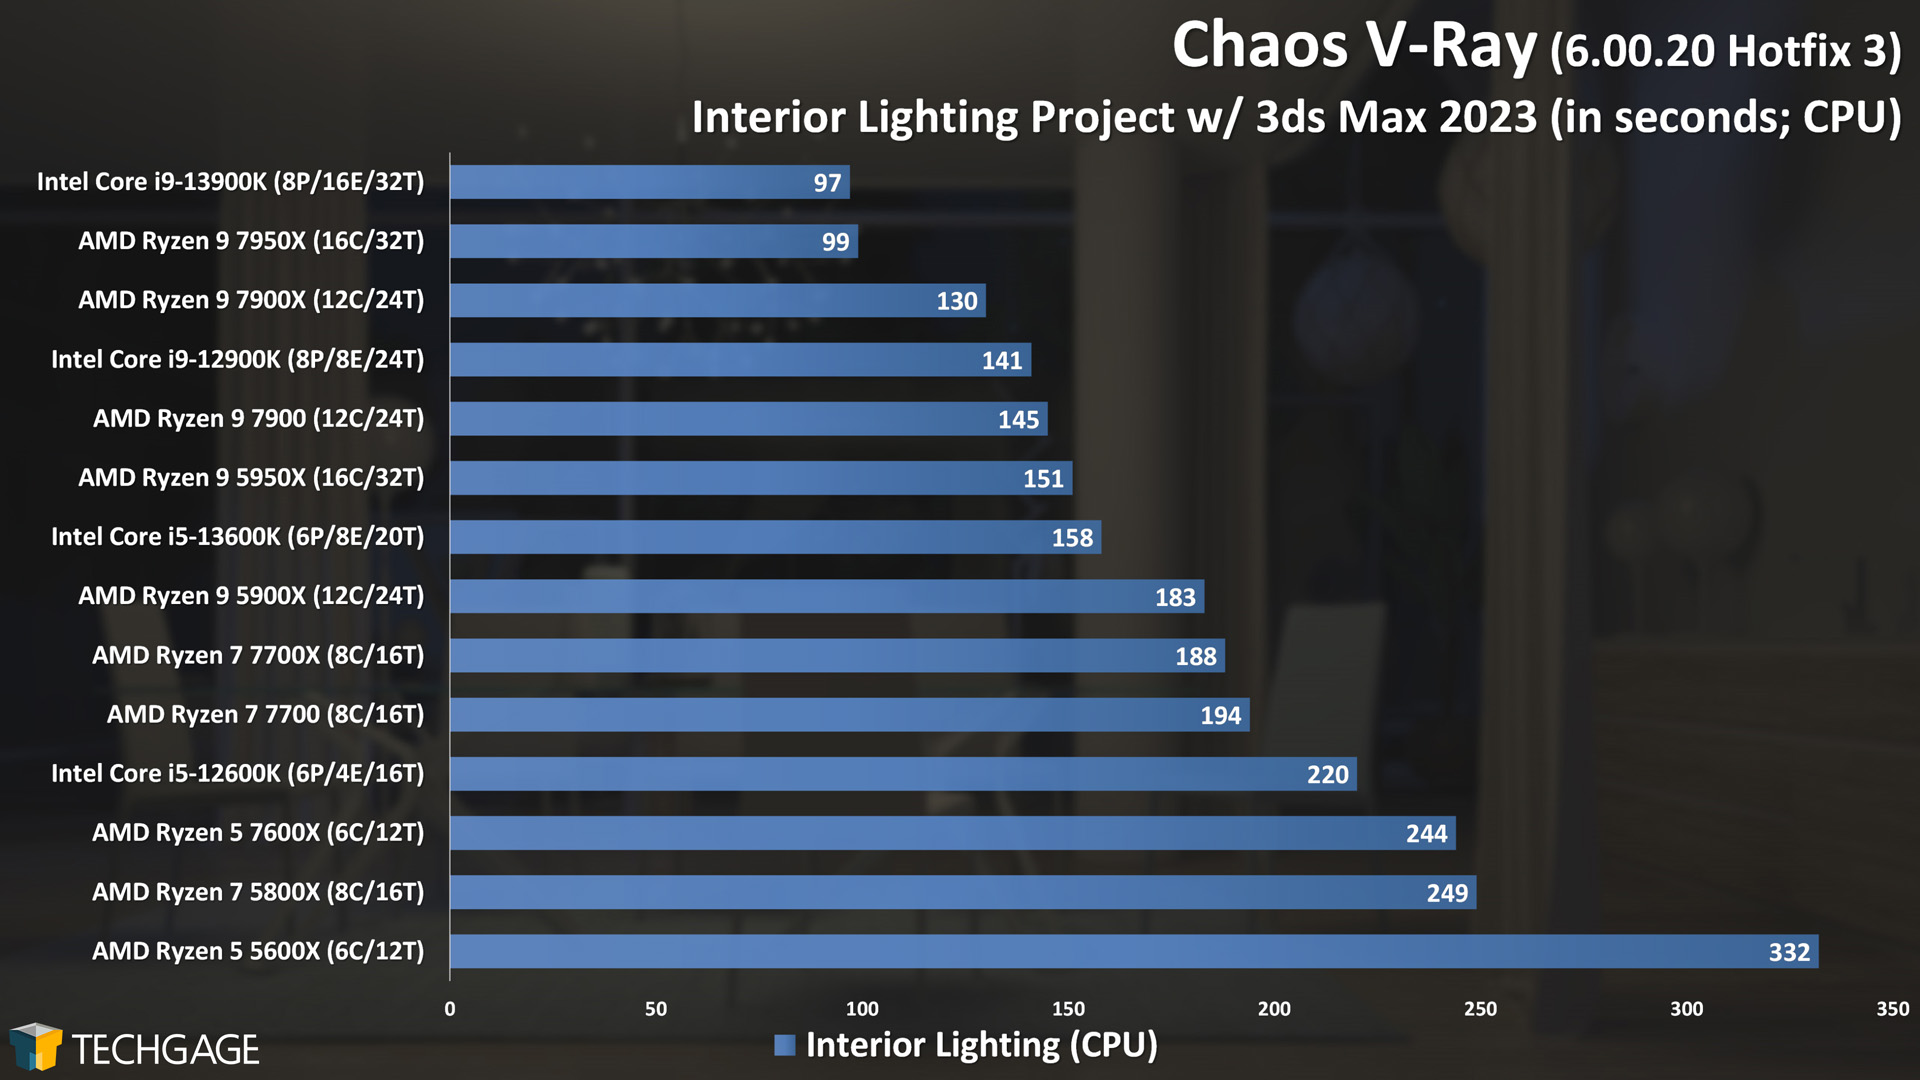 Chaos V-Ray - Interior Lighting CPU Rendering Performance